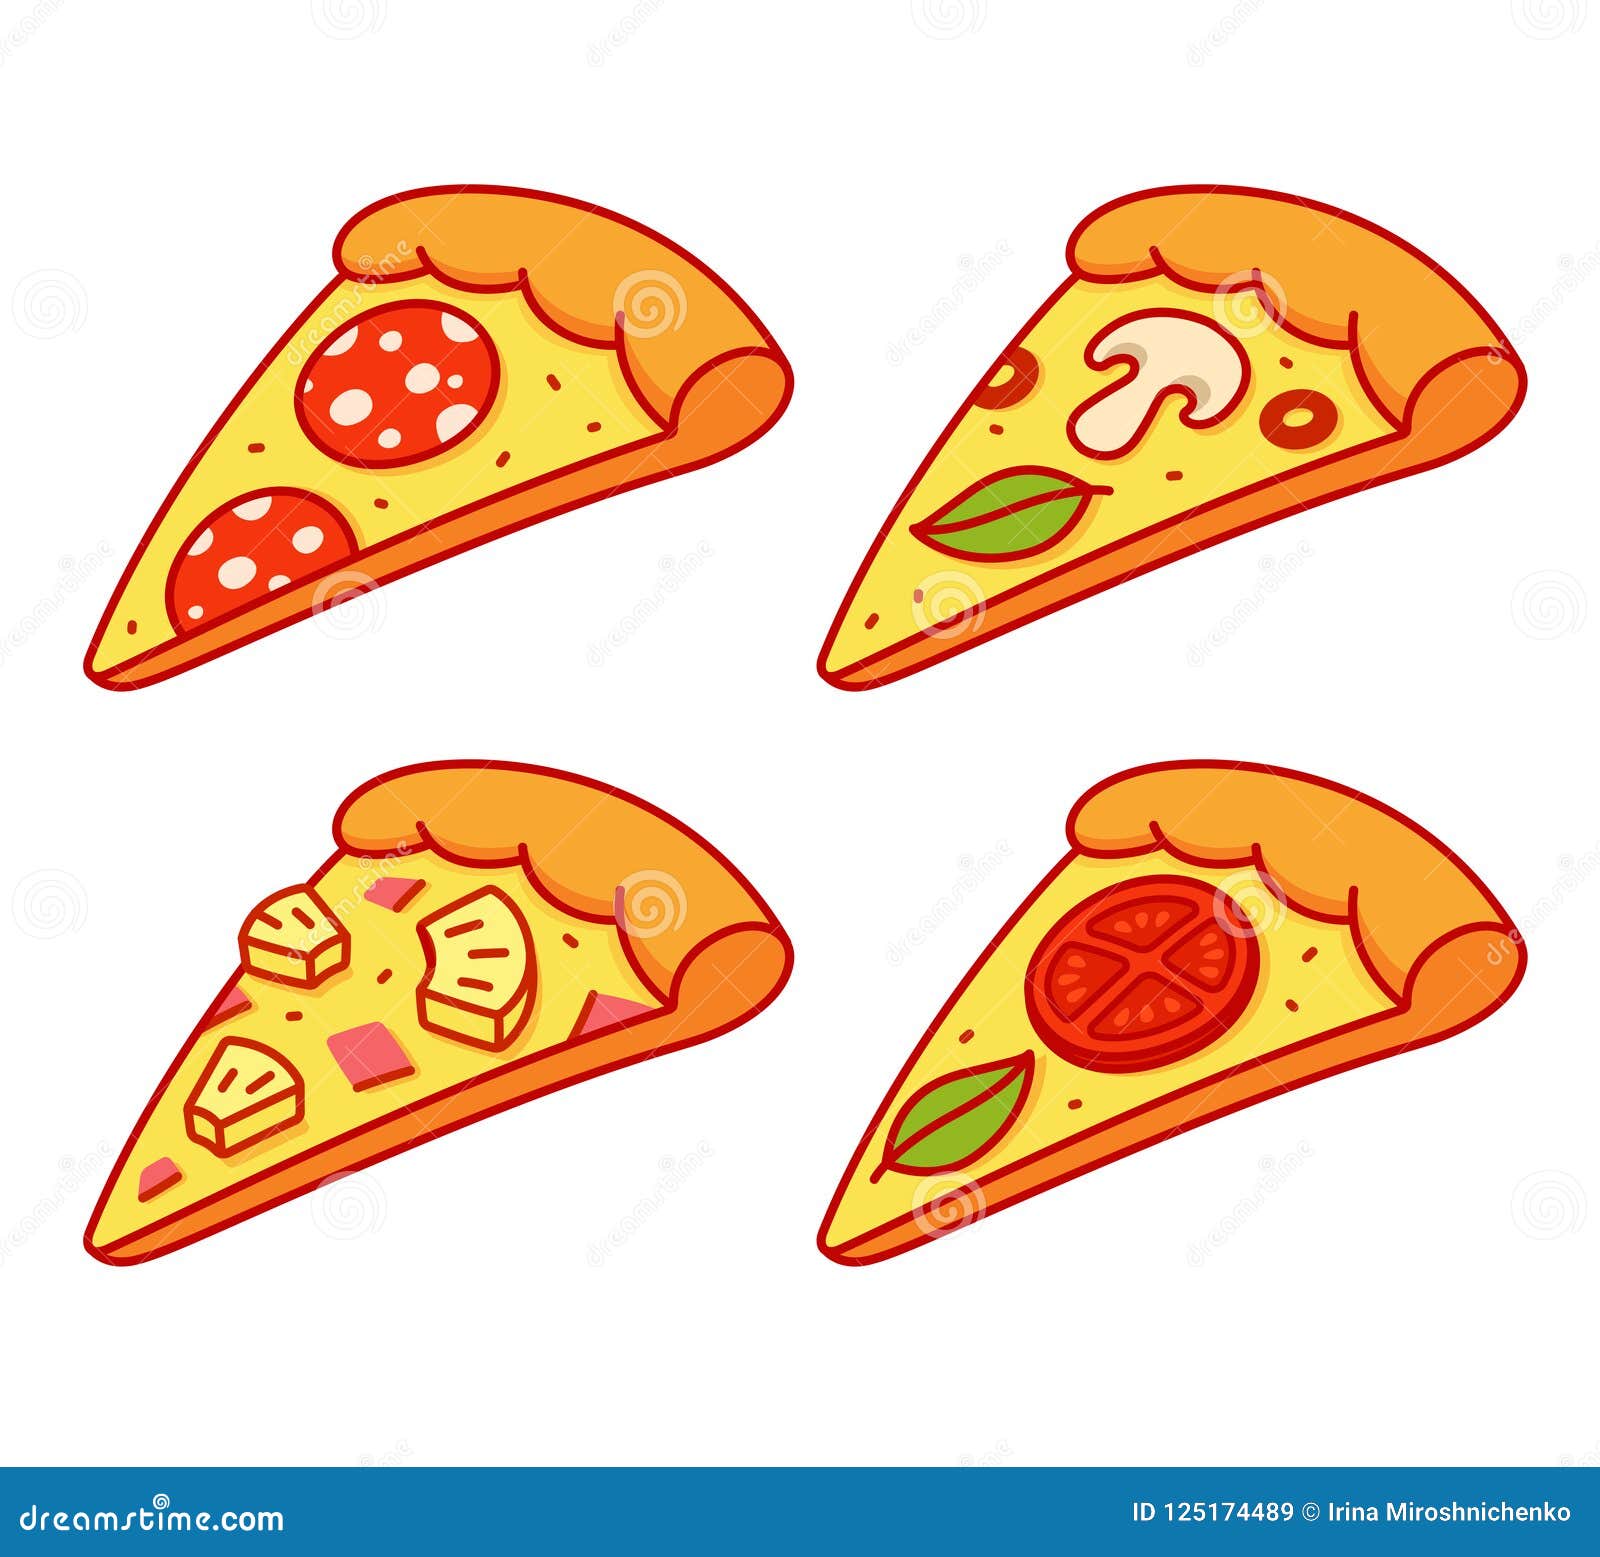 Cartoon Pizza Slice Vector Illustration Graphic | CartoonDealer.com ...